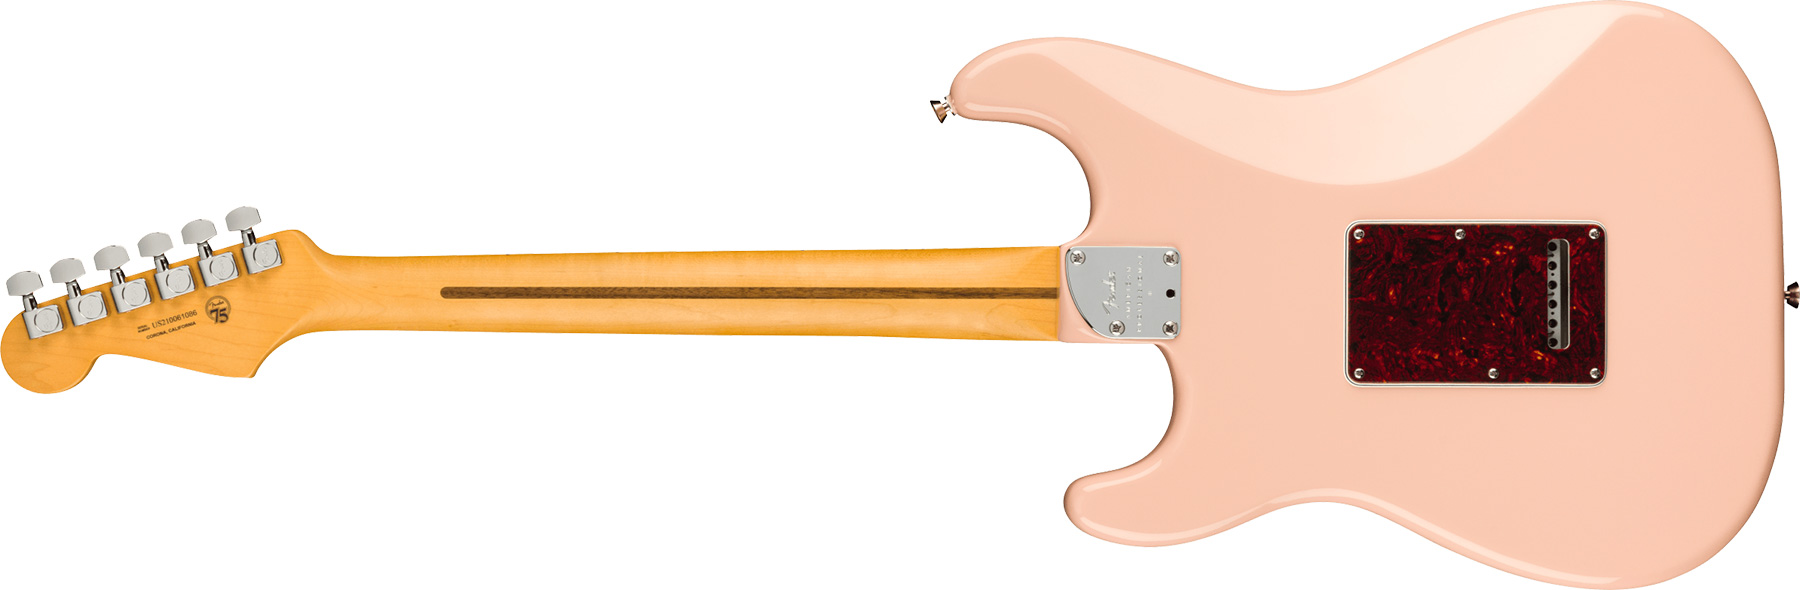 Fender Strat American Pro Ii Ltd Hss Trem Mn - Shell Pink - E-Gitarre in Str-Form - Variation 1